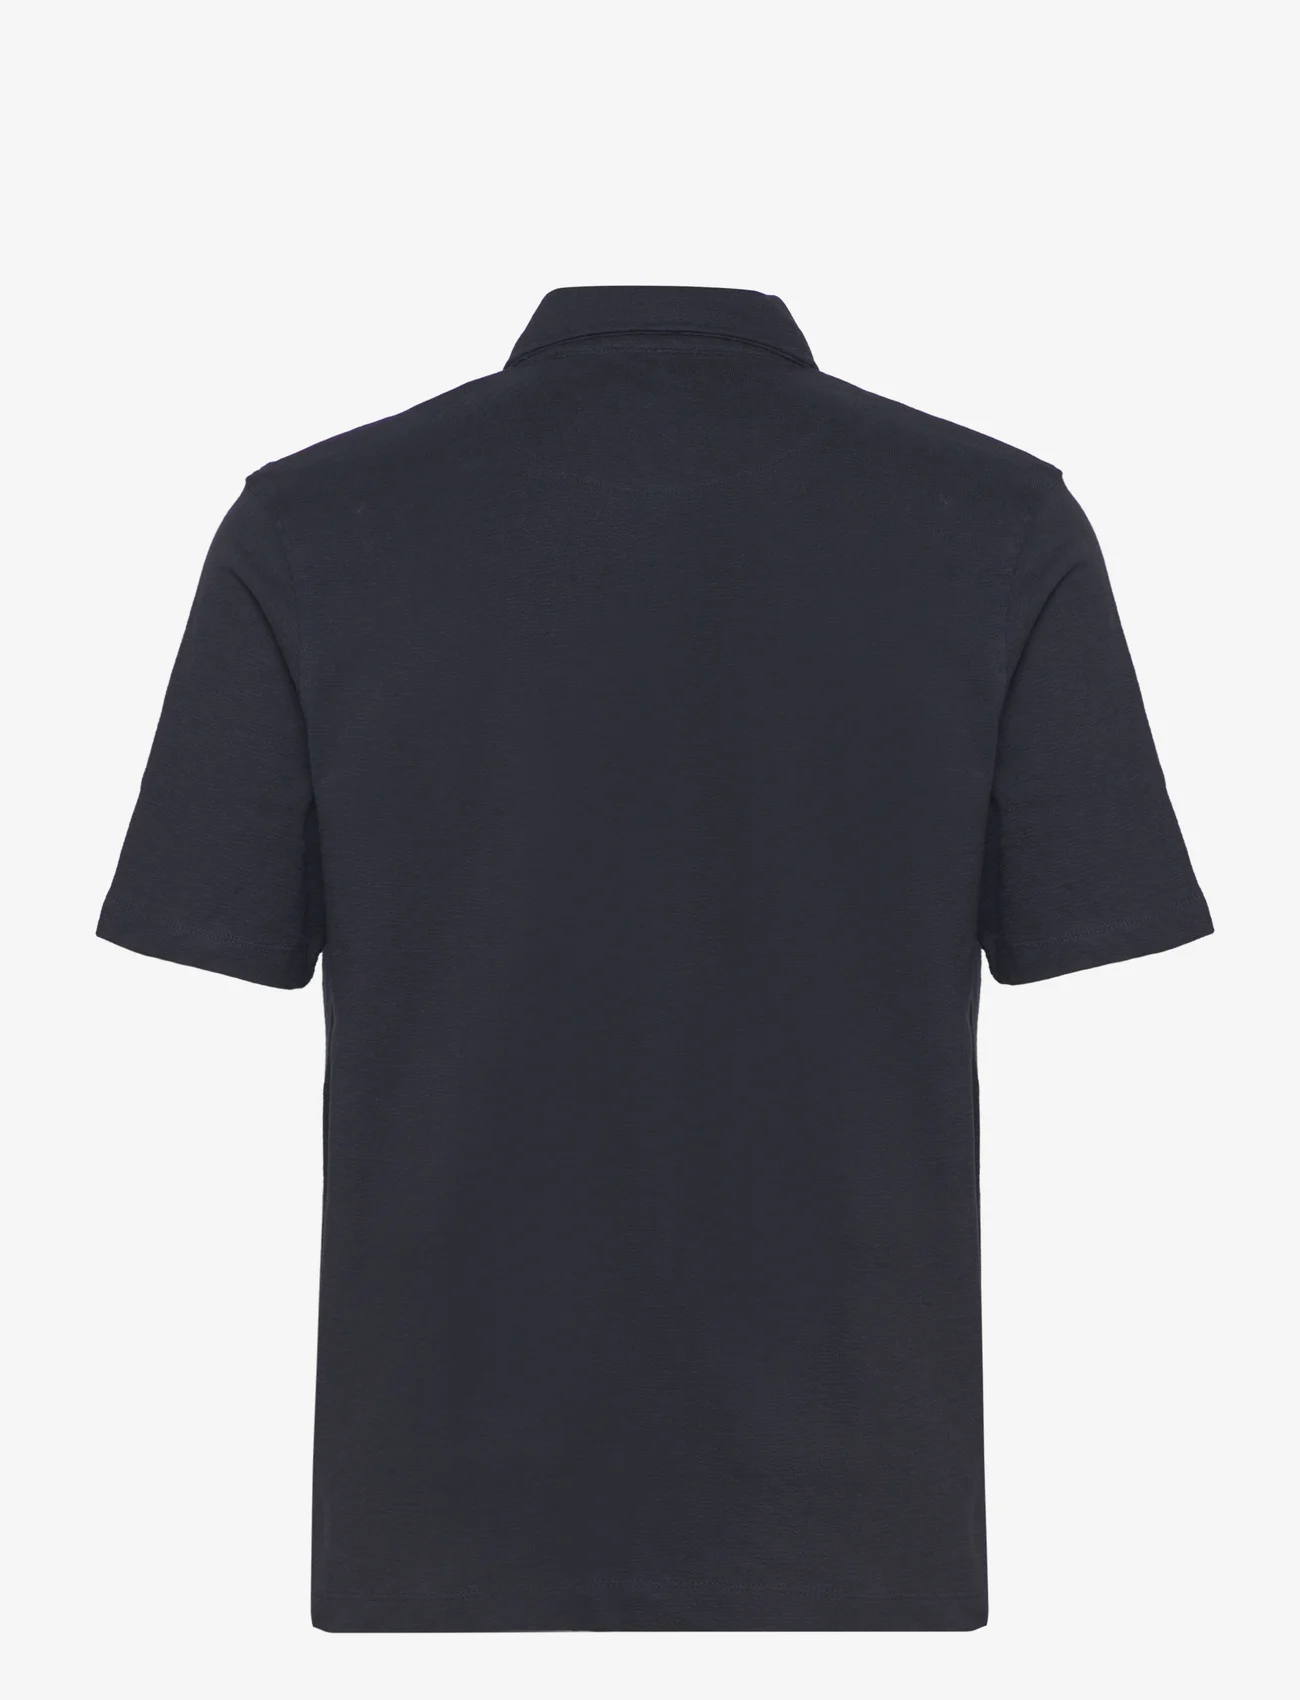 Clean Cut Copenhagen - Calton Structured Shirt S/S - kurzärmelig - dark navy - 1